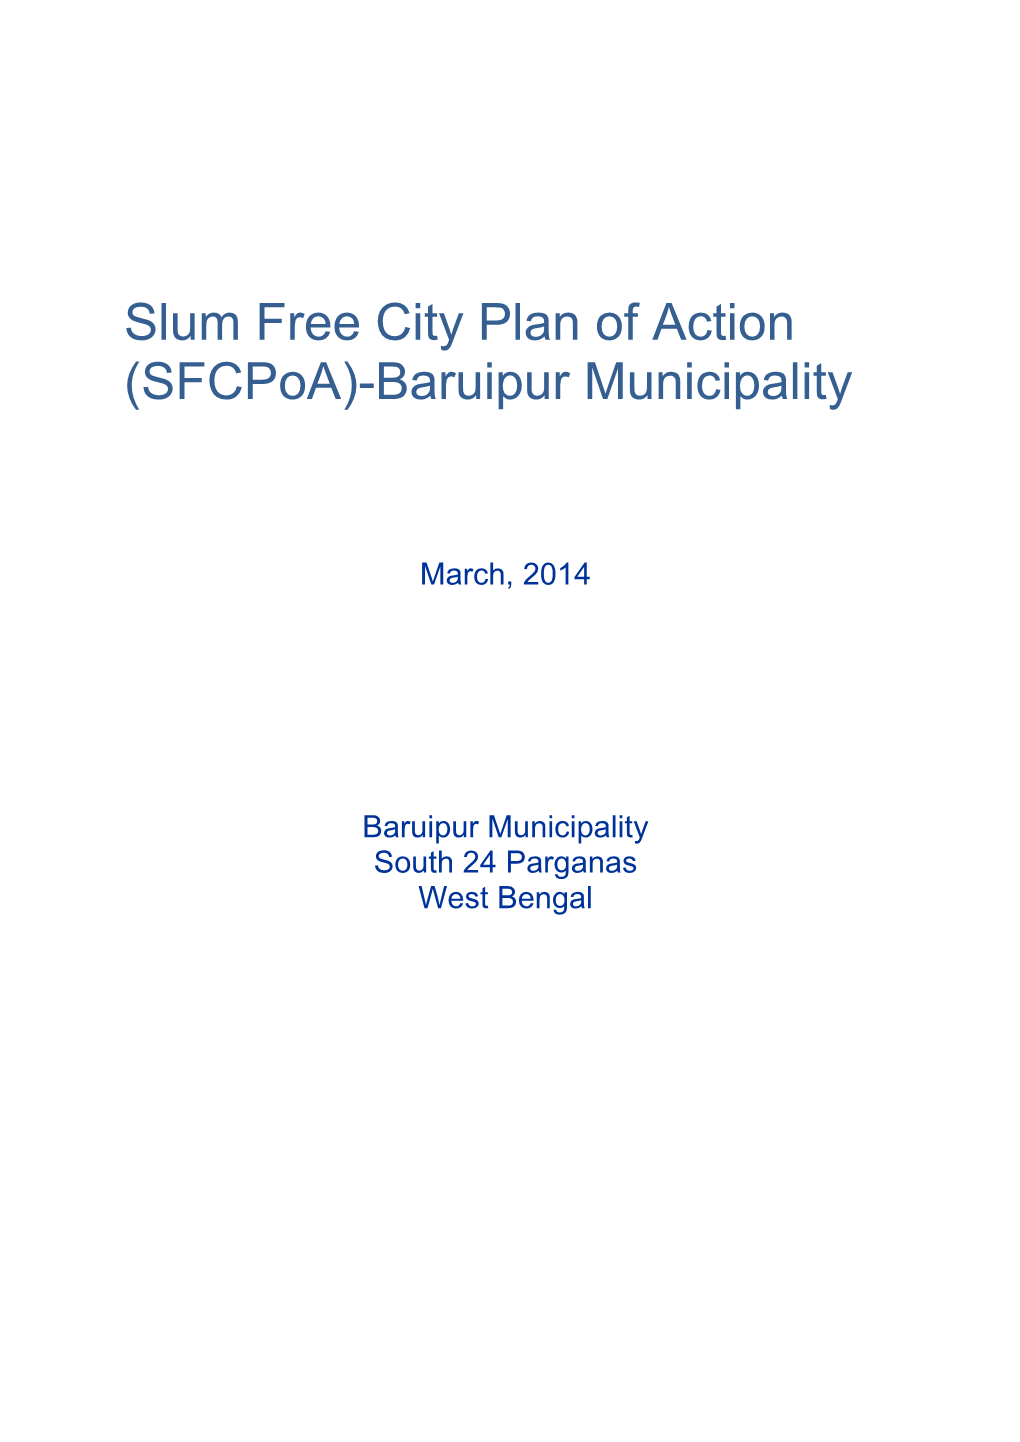 Slum Free City Plan of Action (Sfcpoa)-Baruipur Municipality